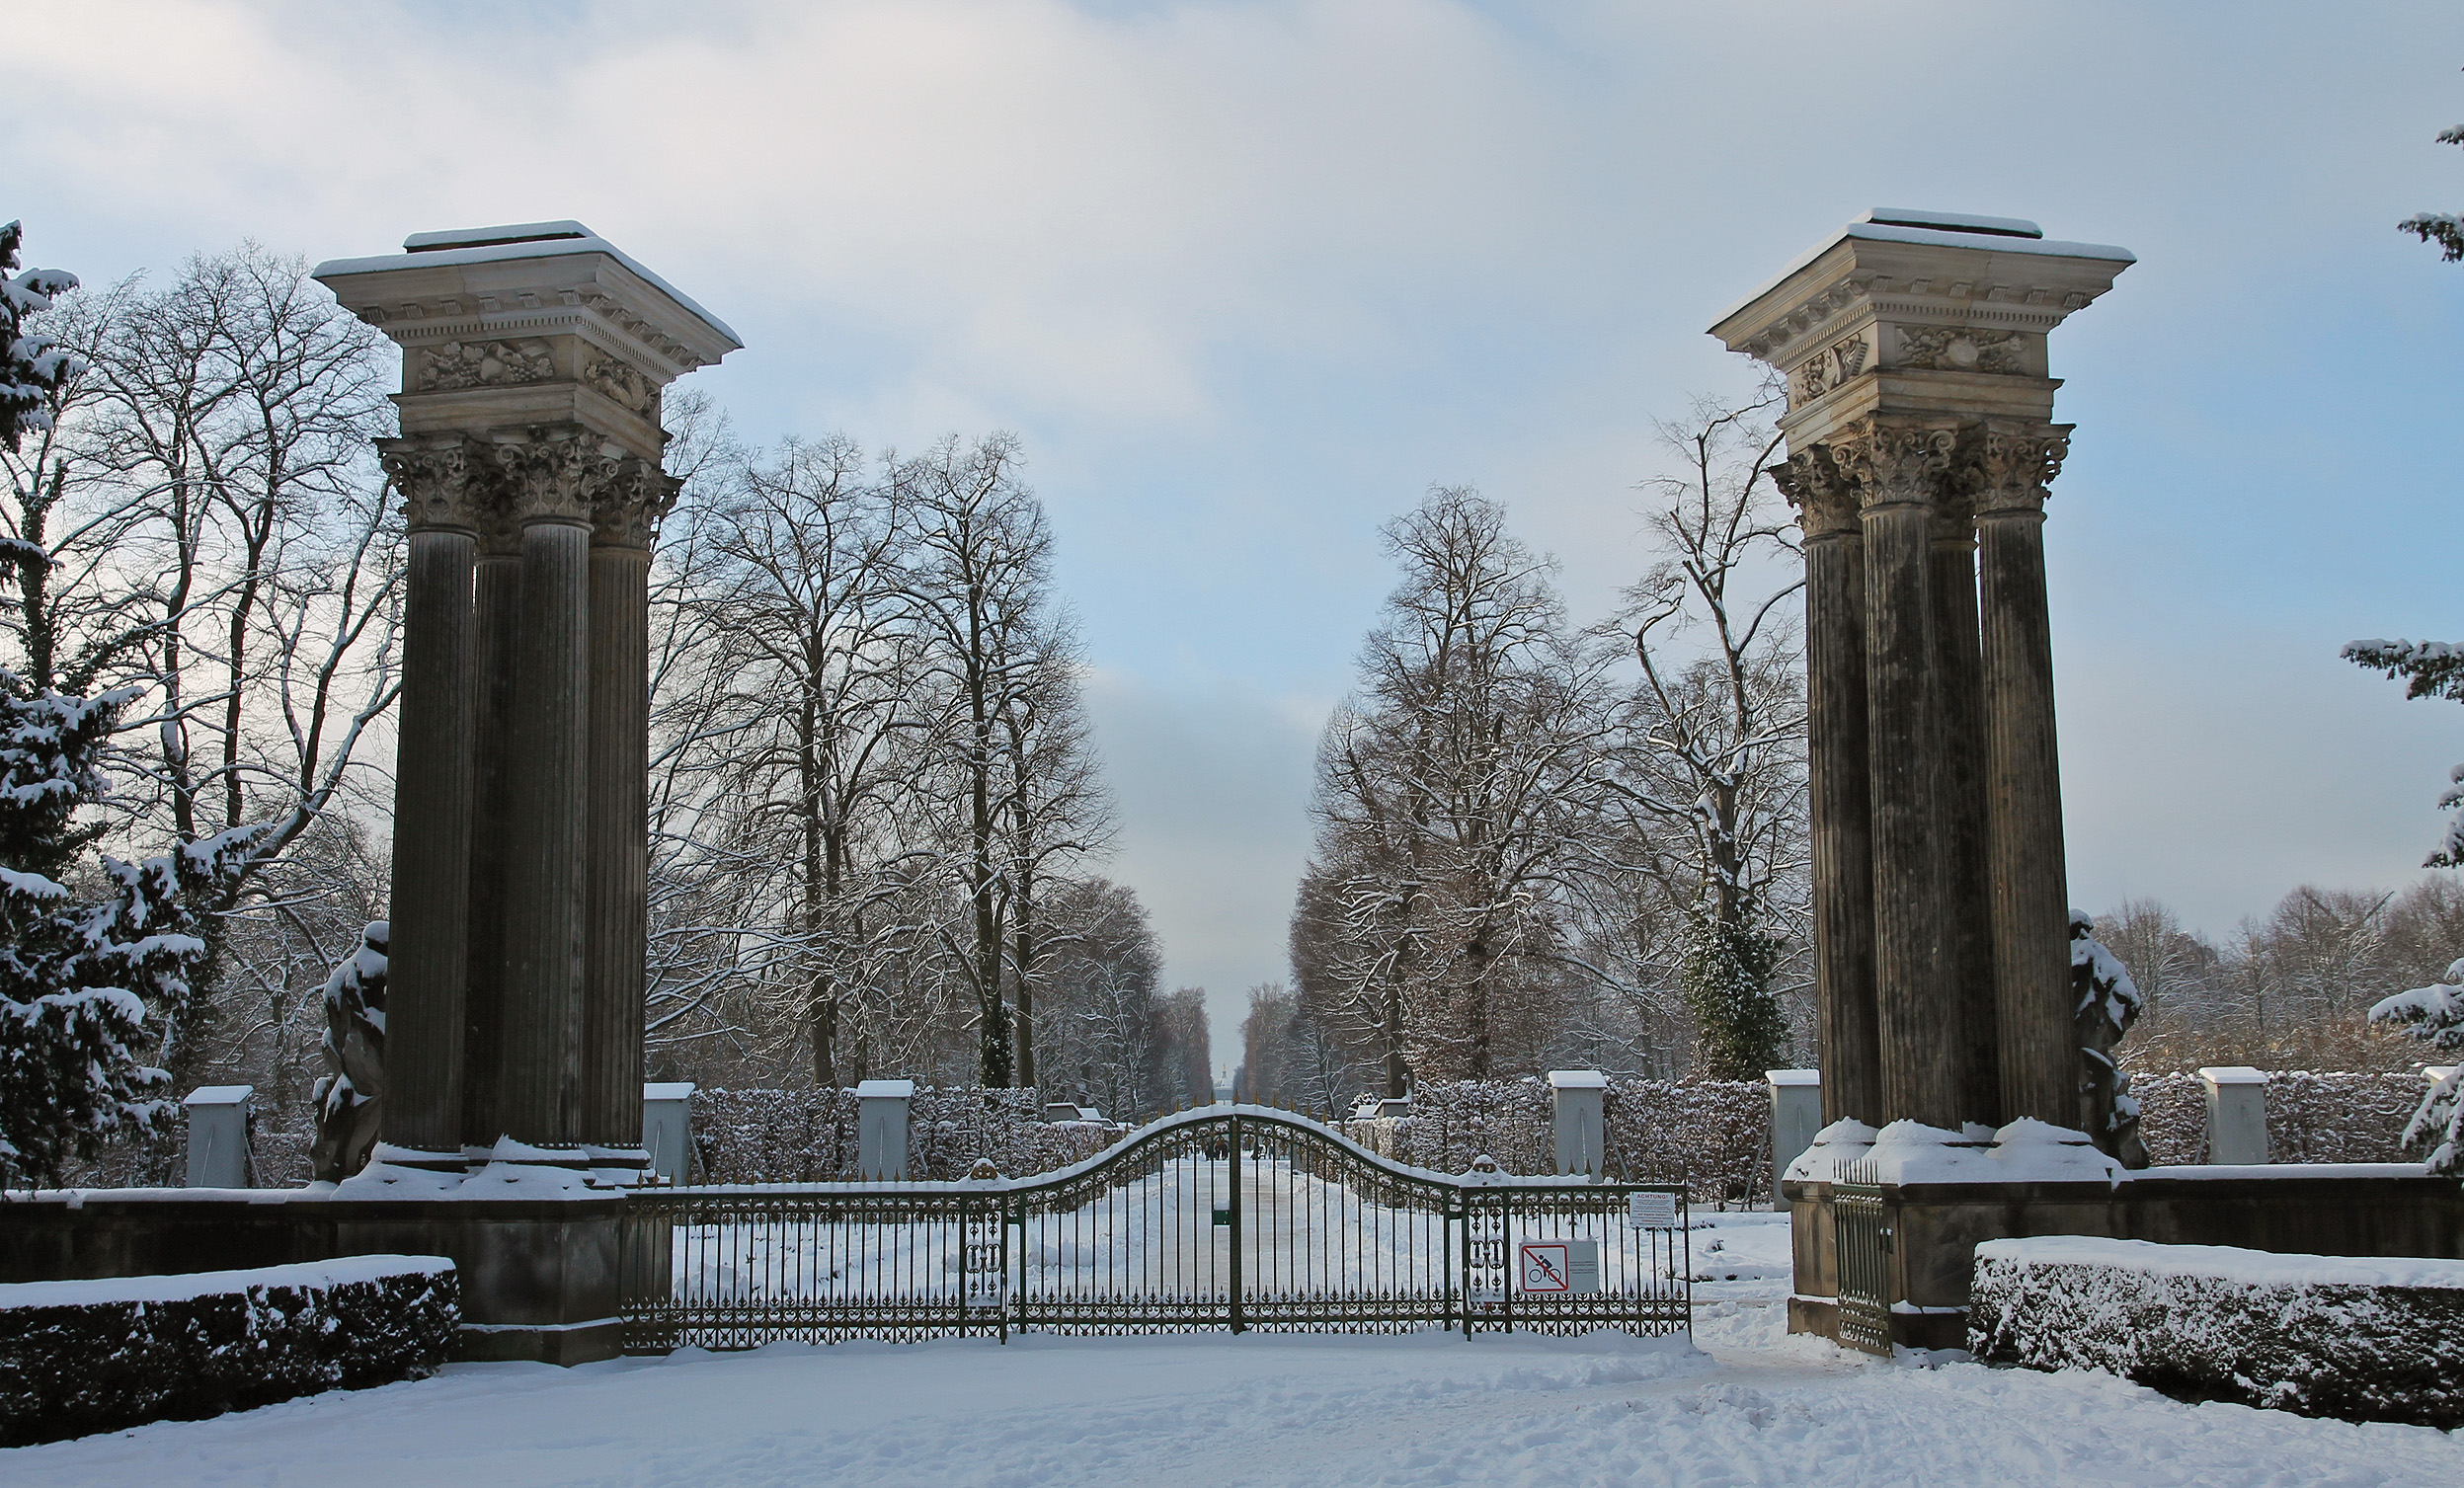 Entrance between the pillars.